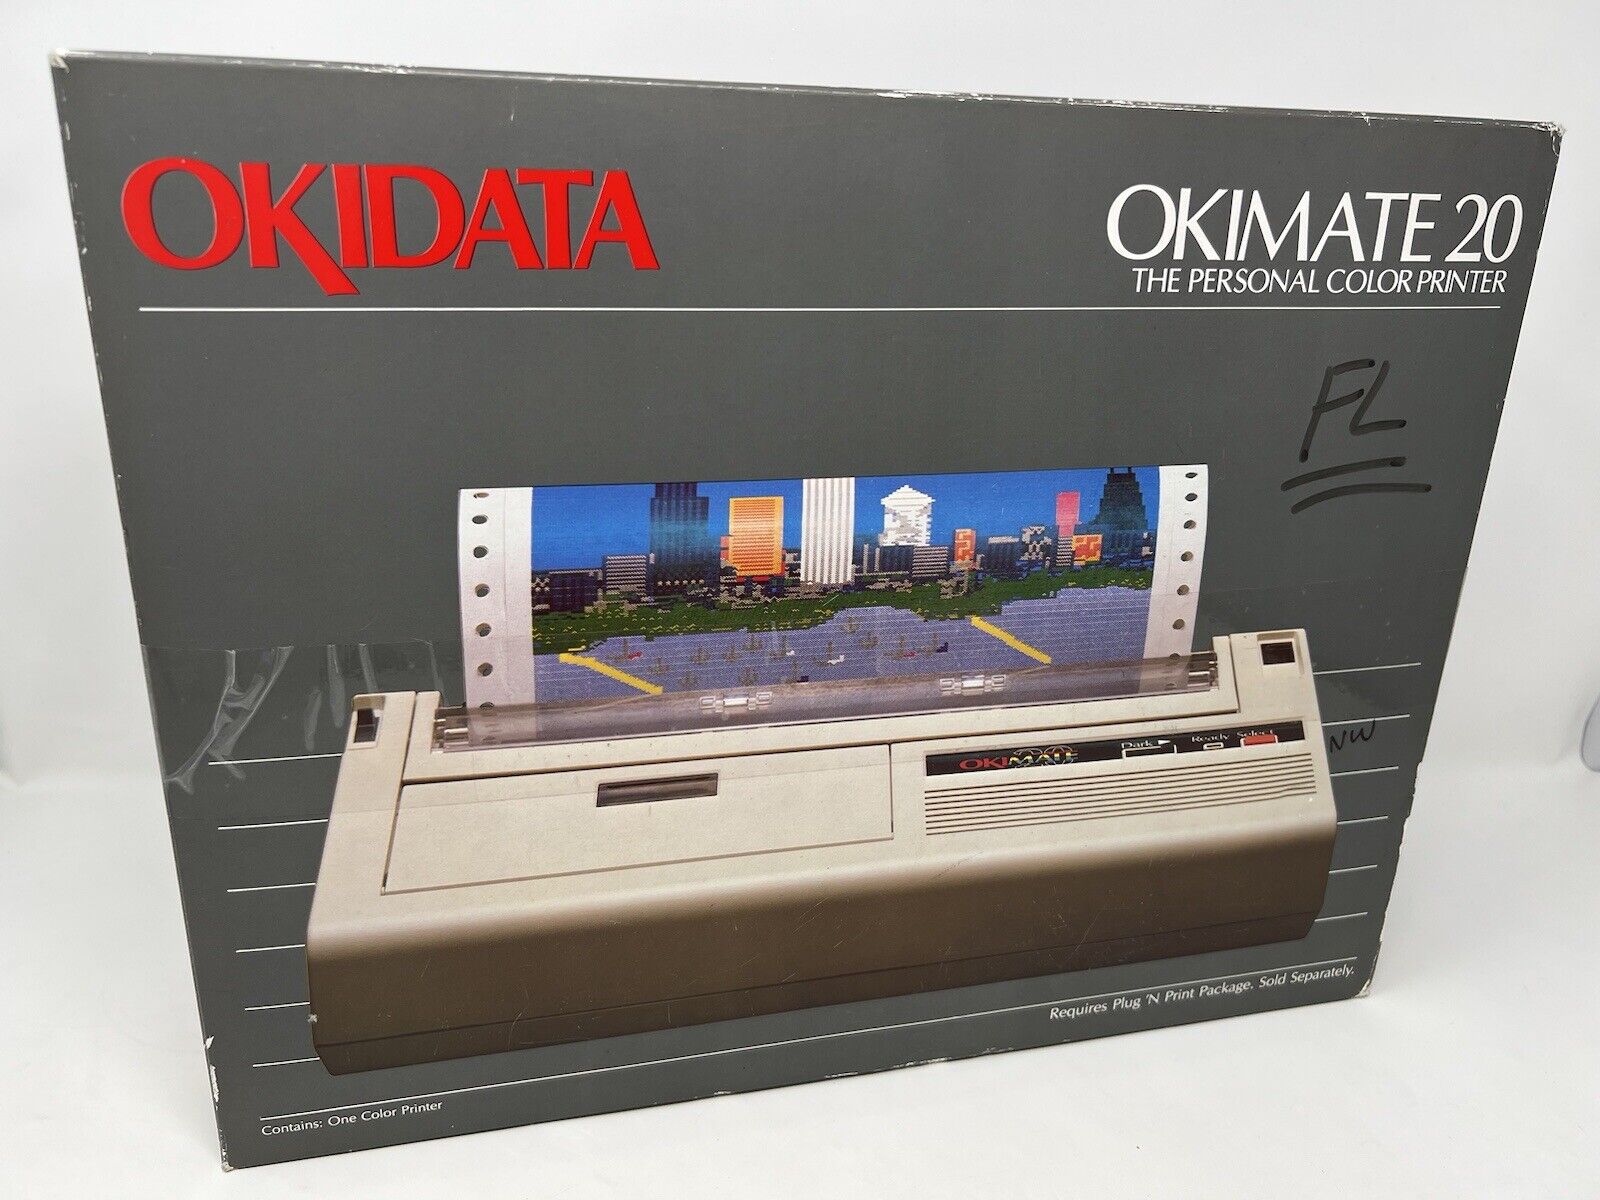 Vintage OKIMATE 20 COLOR PRINTER 1985 Commodore 64 EN3211 NEW Open Box Okidata